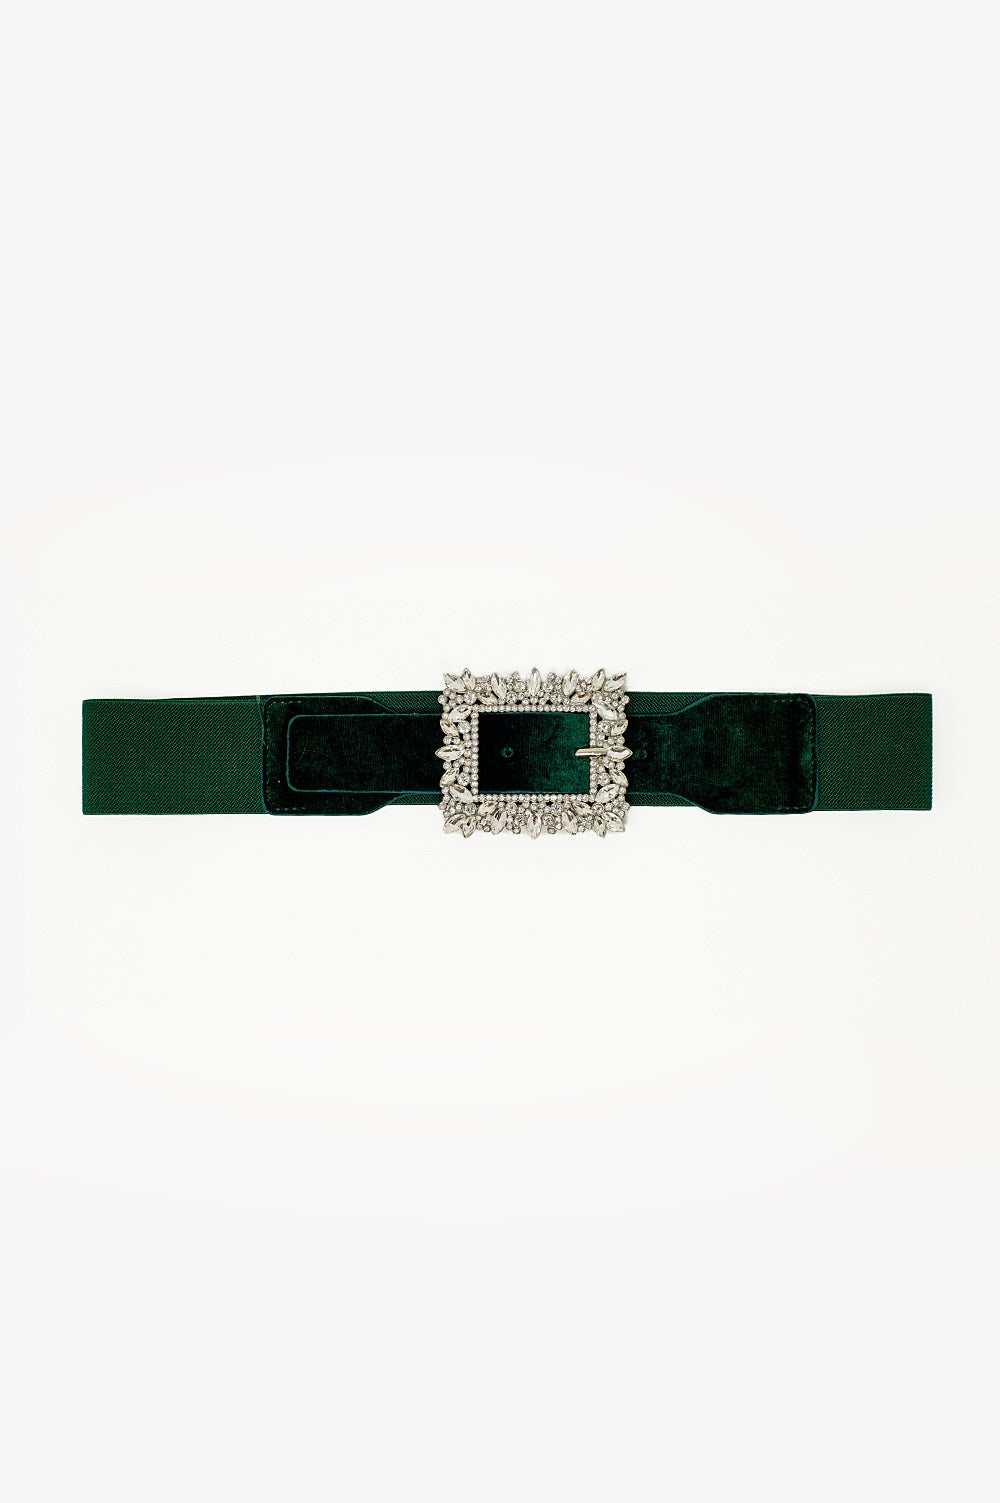 Cintura verde con strass ed elastico regolabile